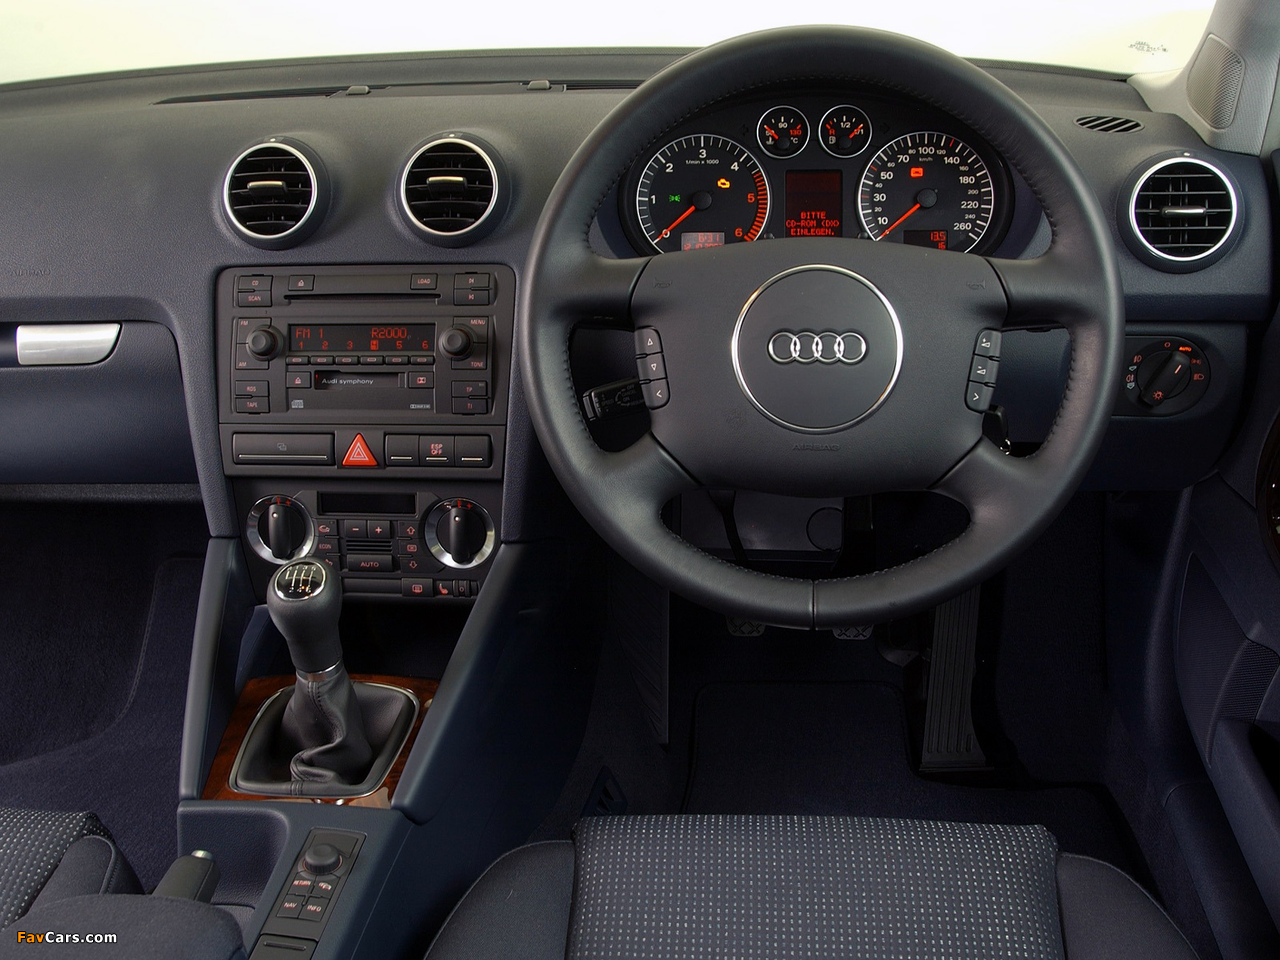 Audi A3 2.0 TDI ZA-spec 8P (2003–2005) images (1280 x 960)